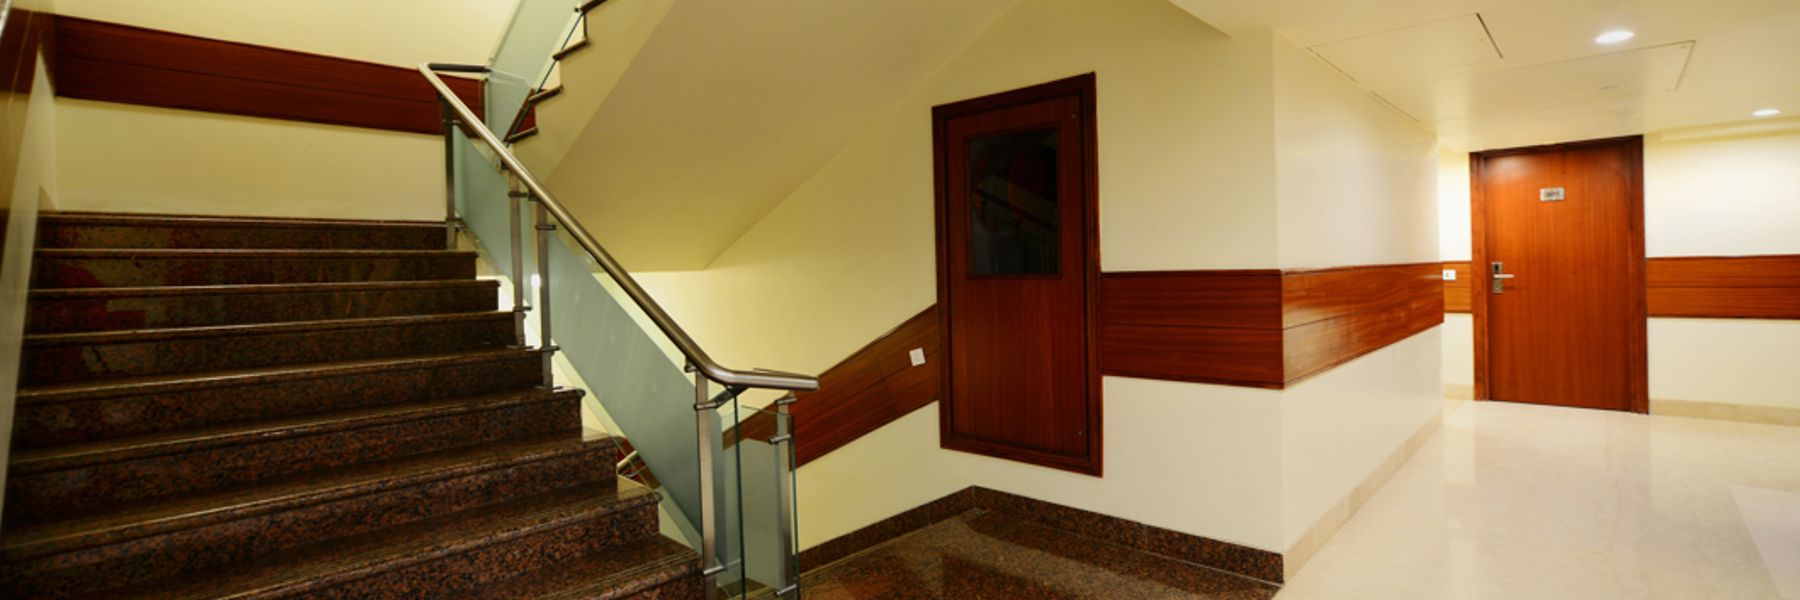 Corridor Stairs of hotel regend grand